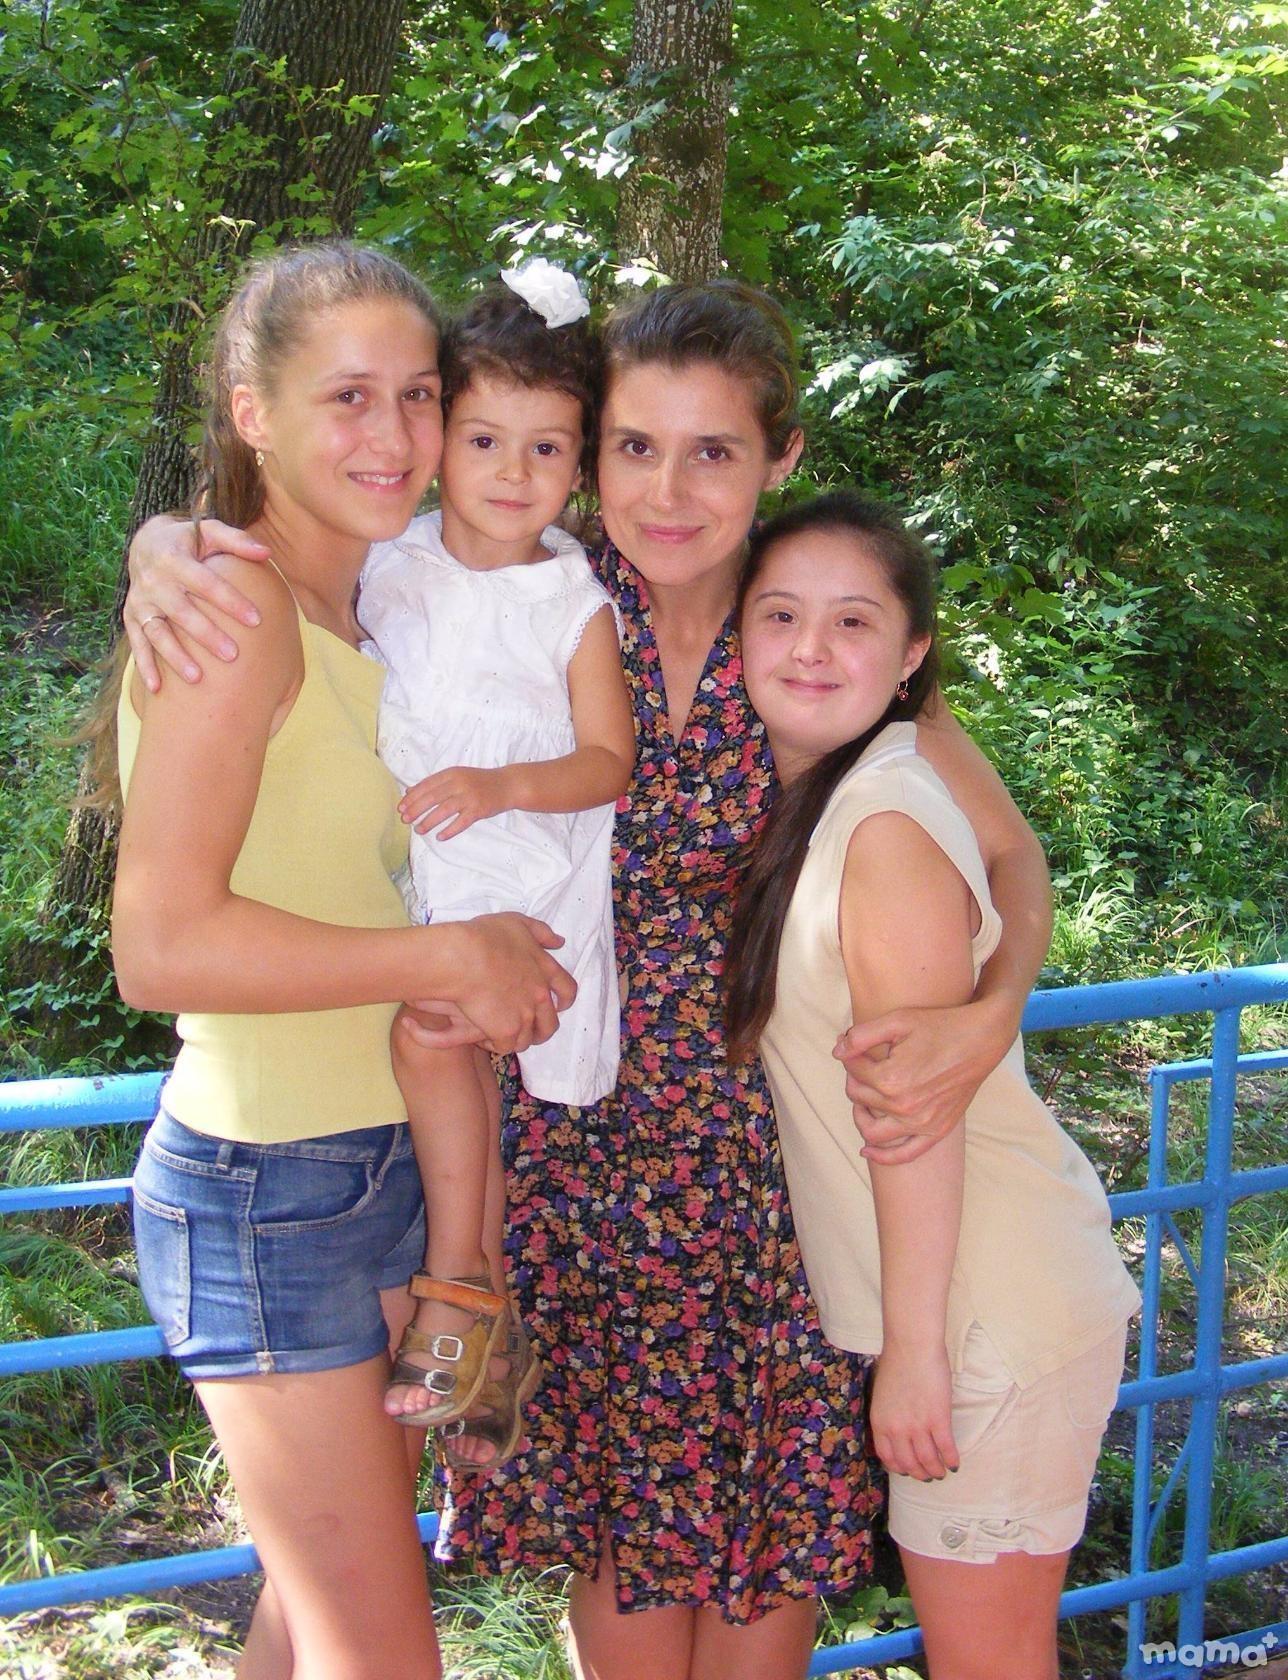 Family portrait: Natalia și Serghei Boboc